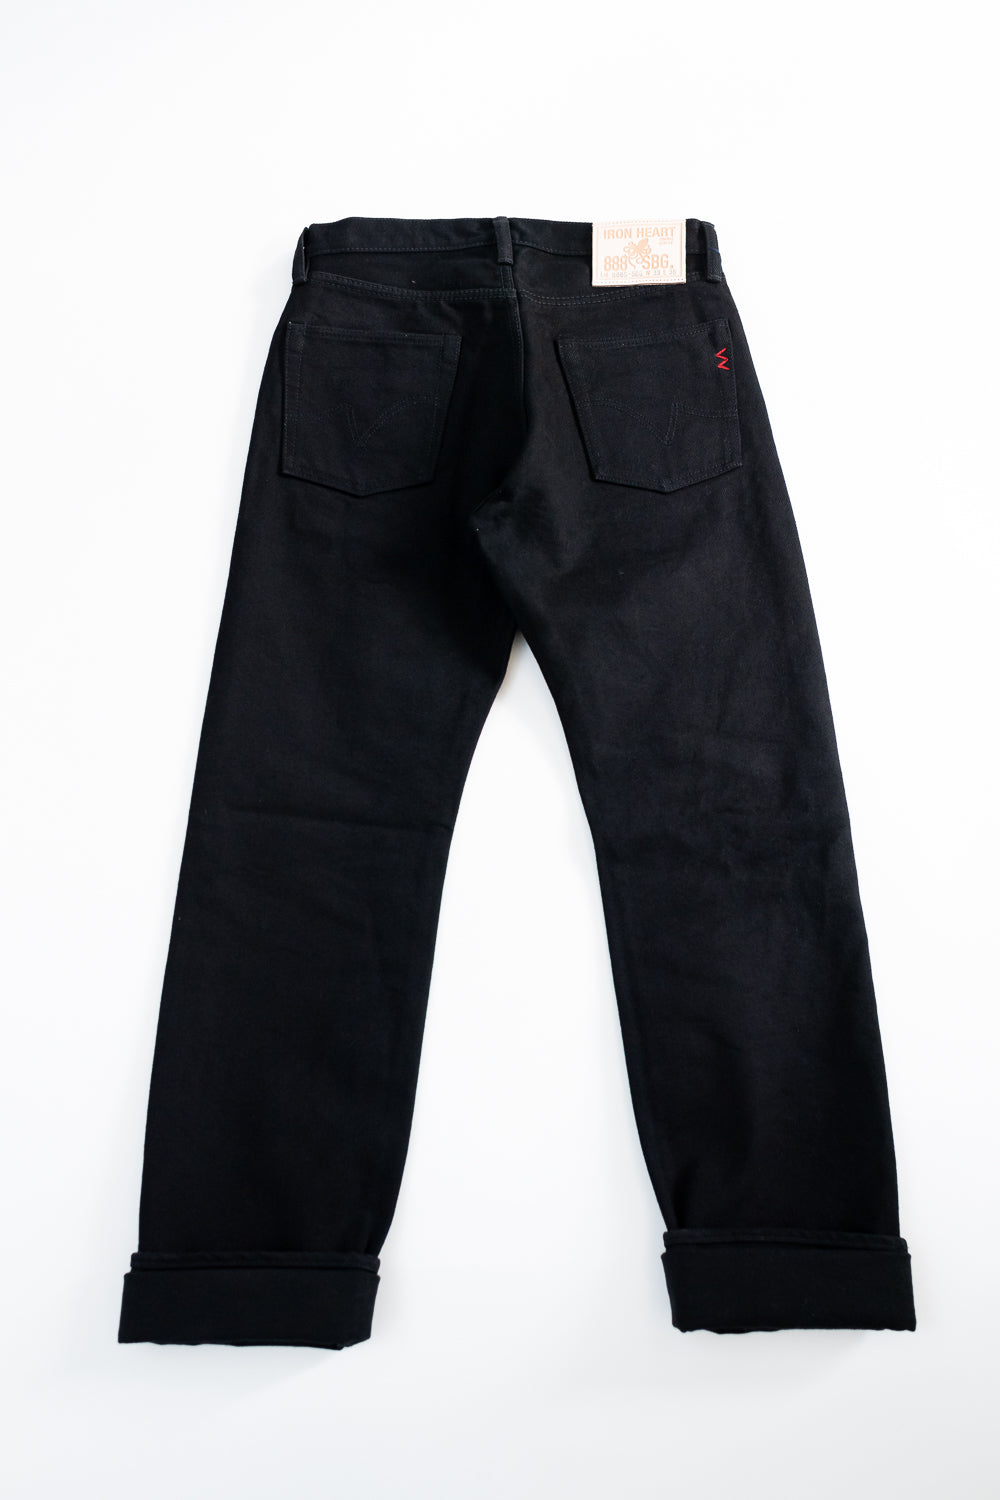 Iron Heart 21oz Selvedge Denim Medium/High Rise Tapered Cut Jeans